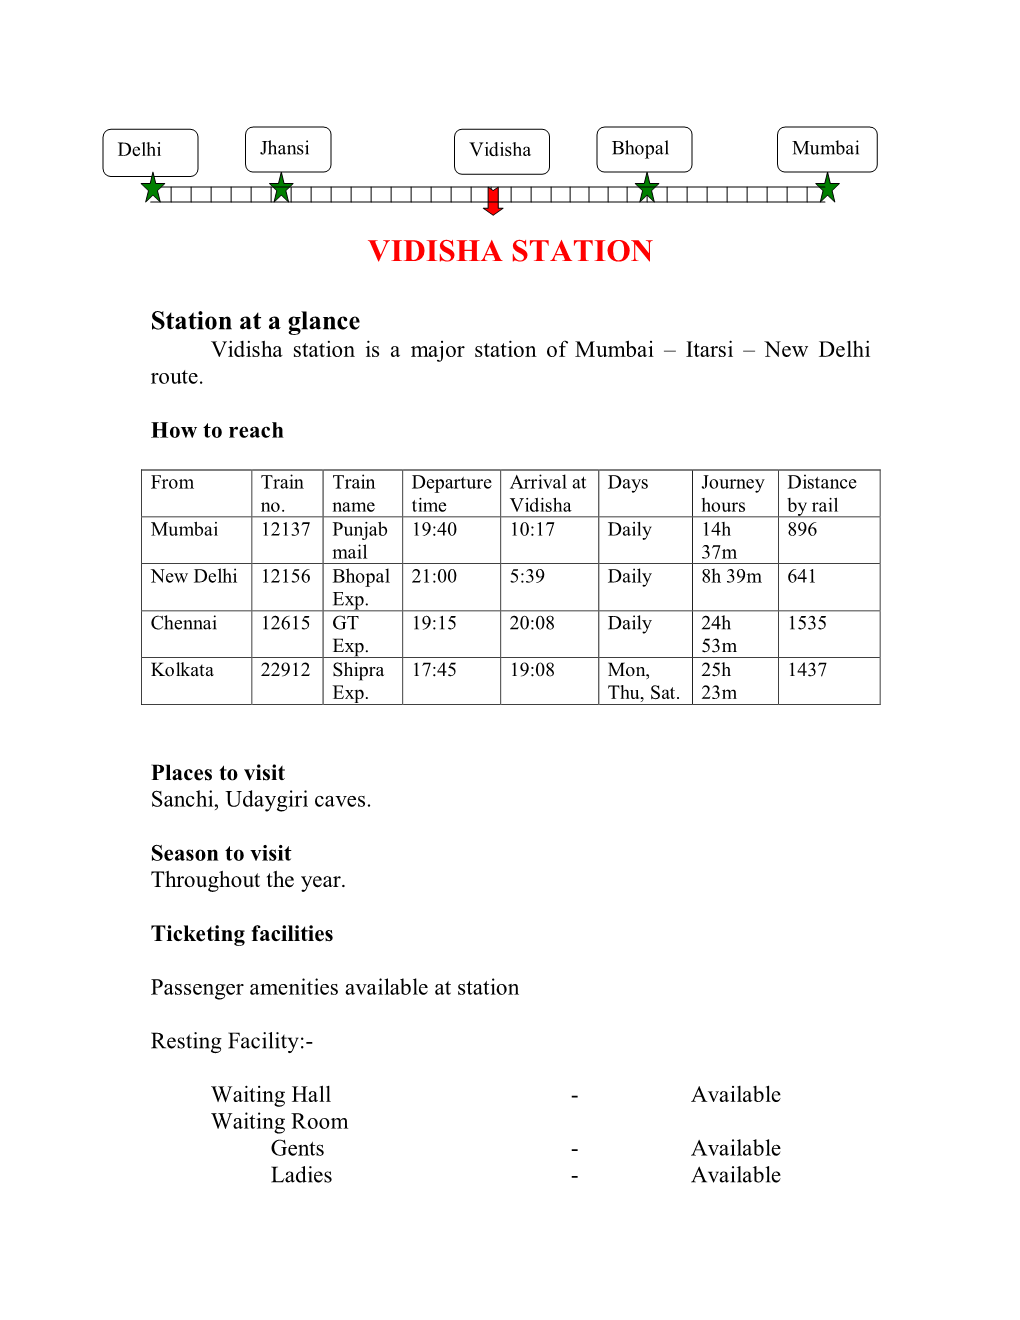 Vidisha Station